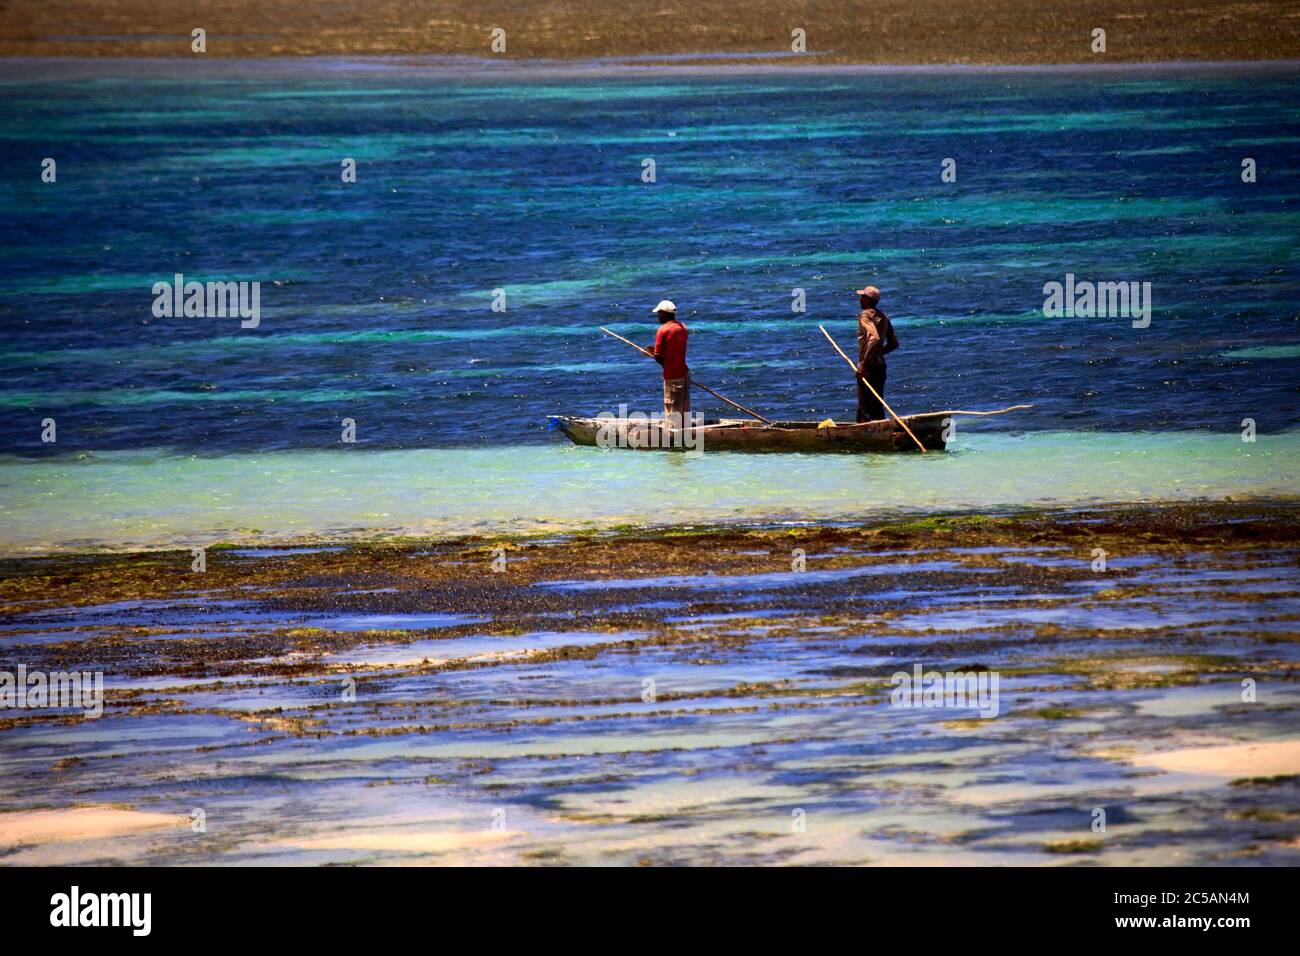 Ukunda, Kenia - January 04 2017: two fishermen in a fishing boat in shallow water. Kenya coast Stock Photo